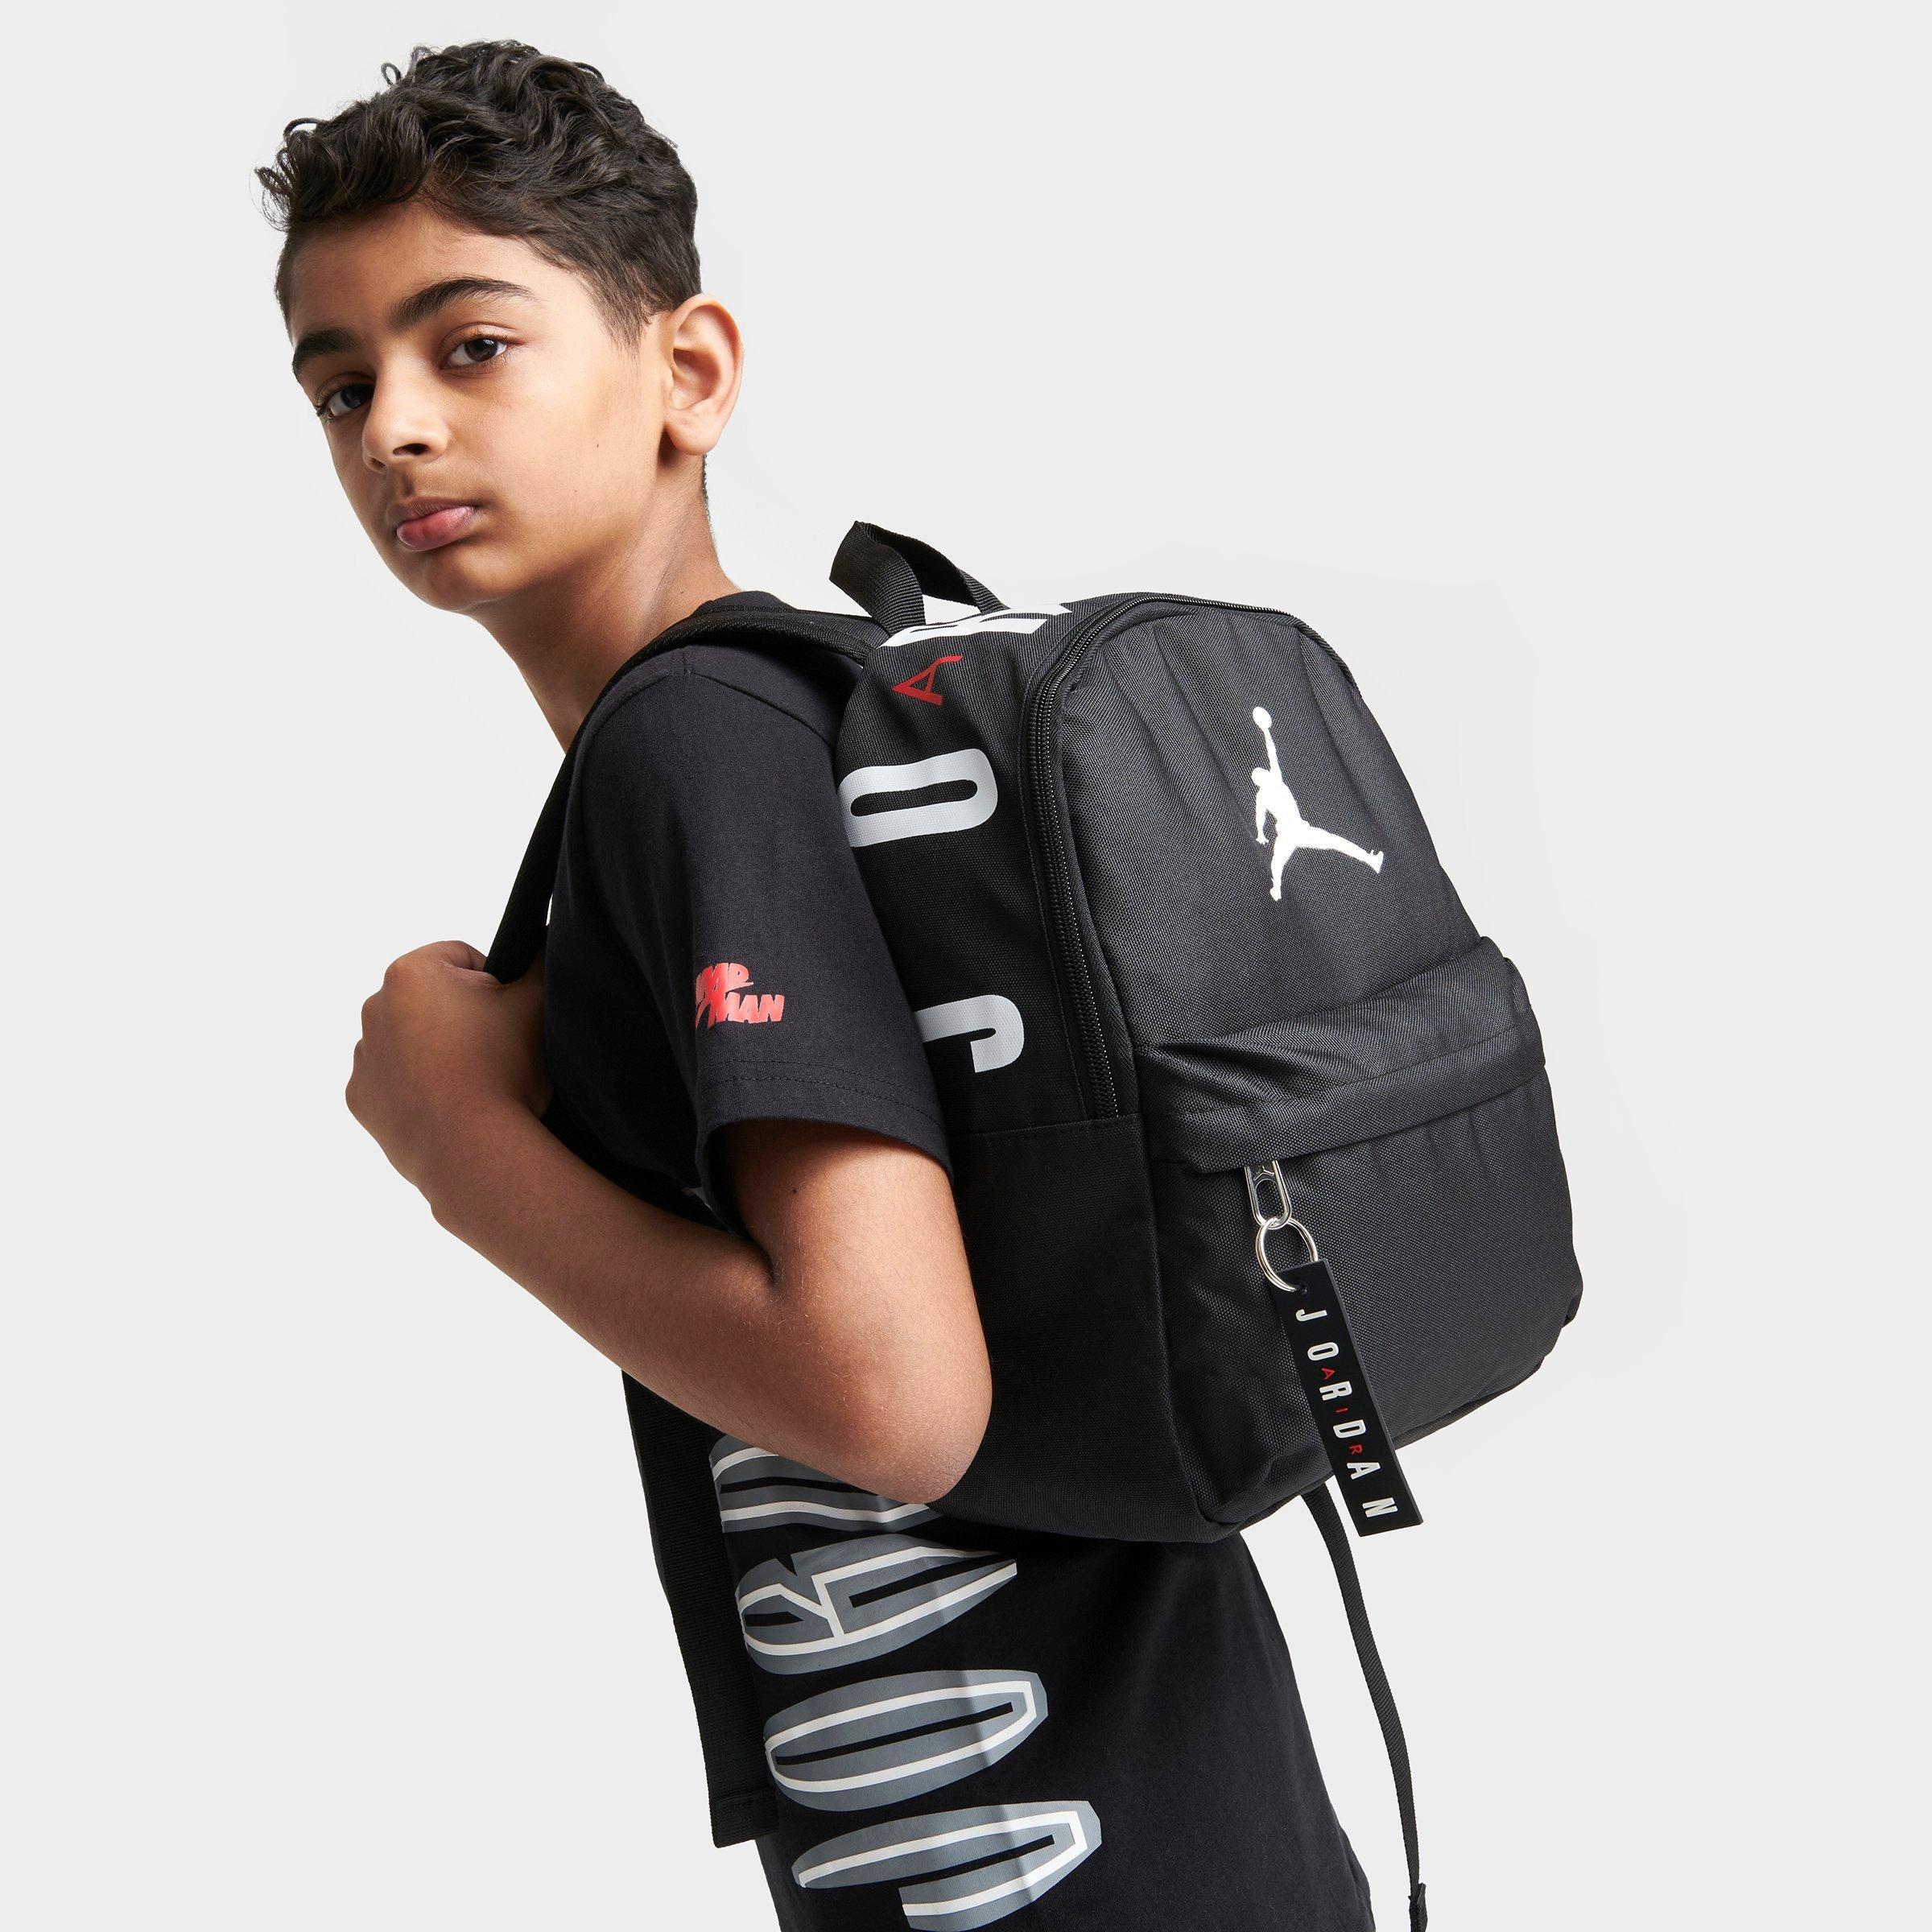 boys jordan backpack